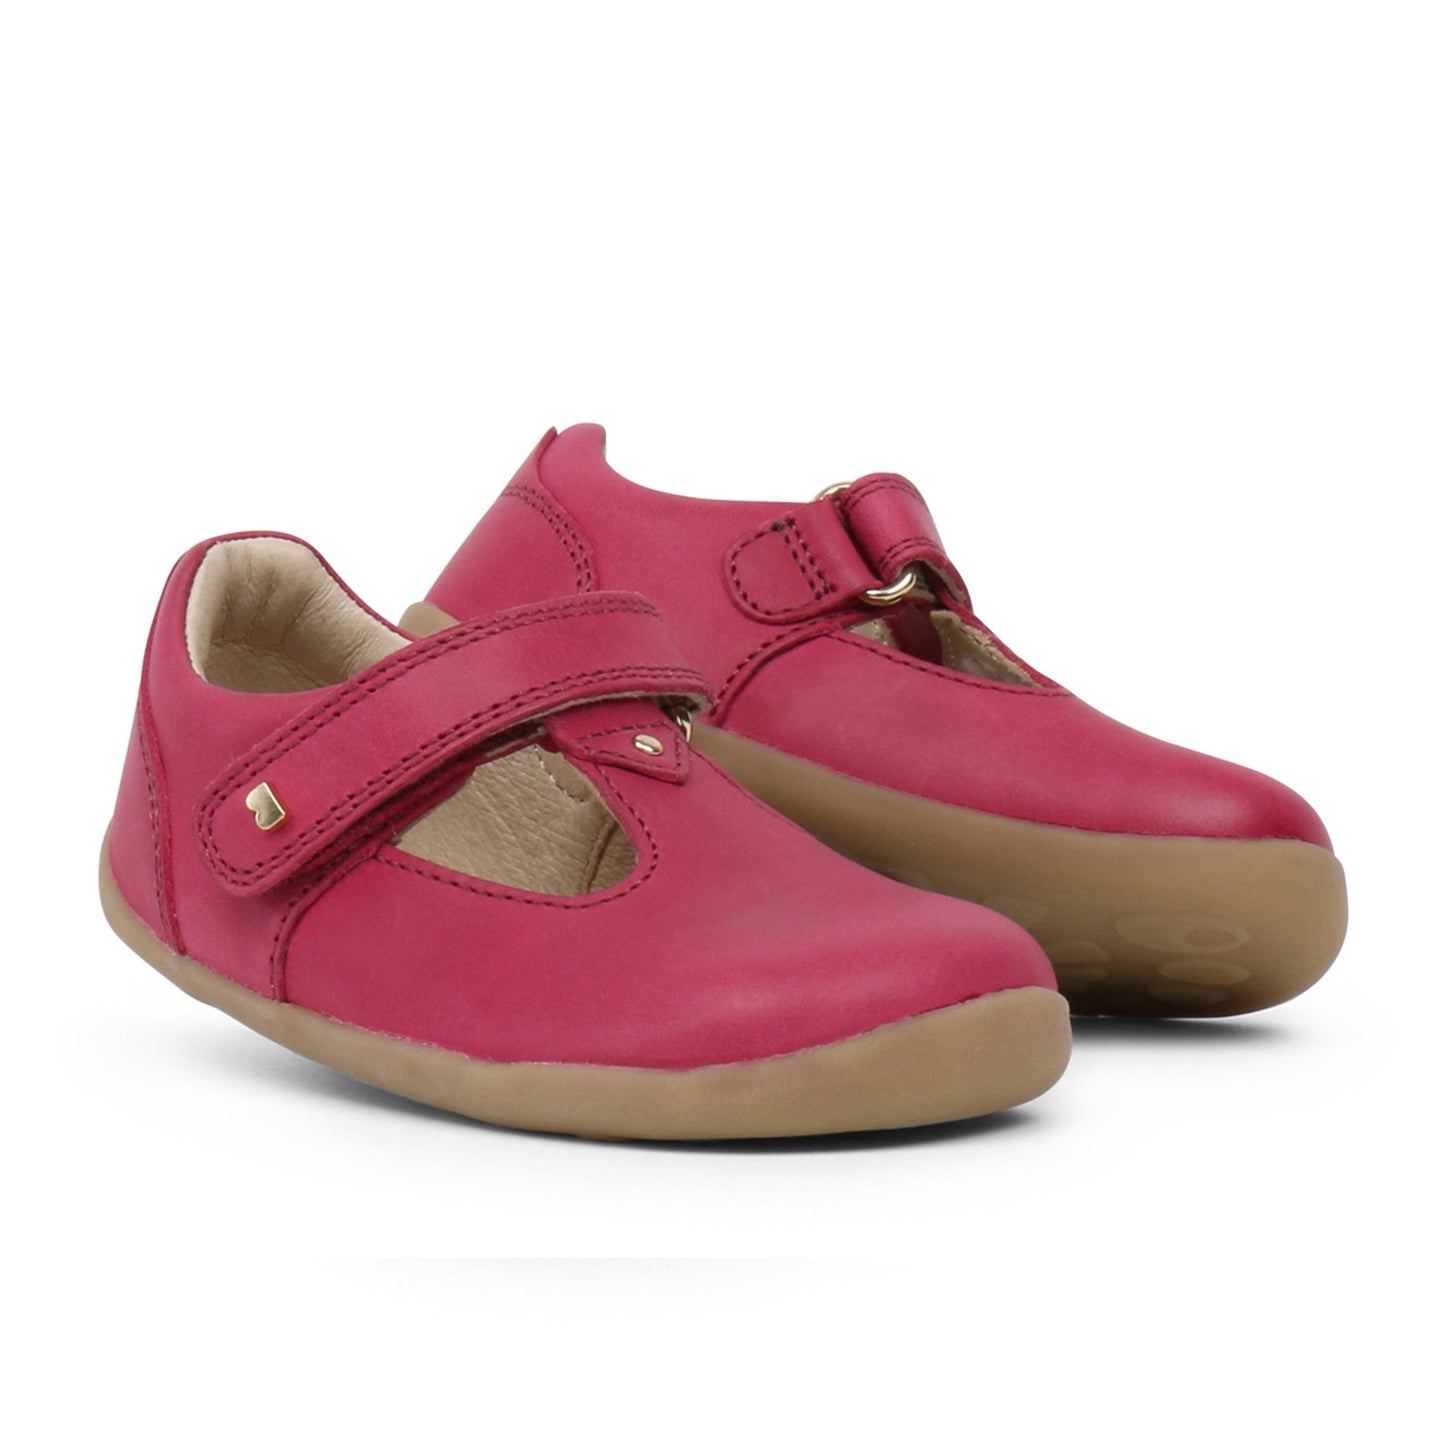 SU Louise T-Bar Shoe in Dark Pink Leather